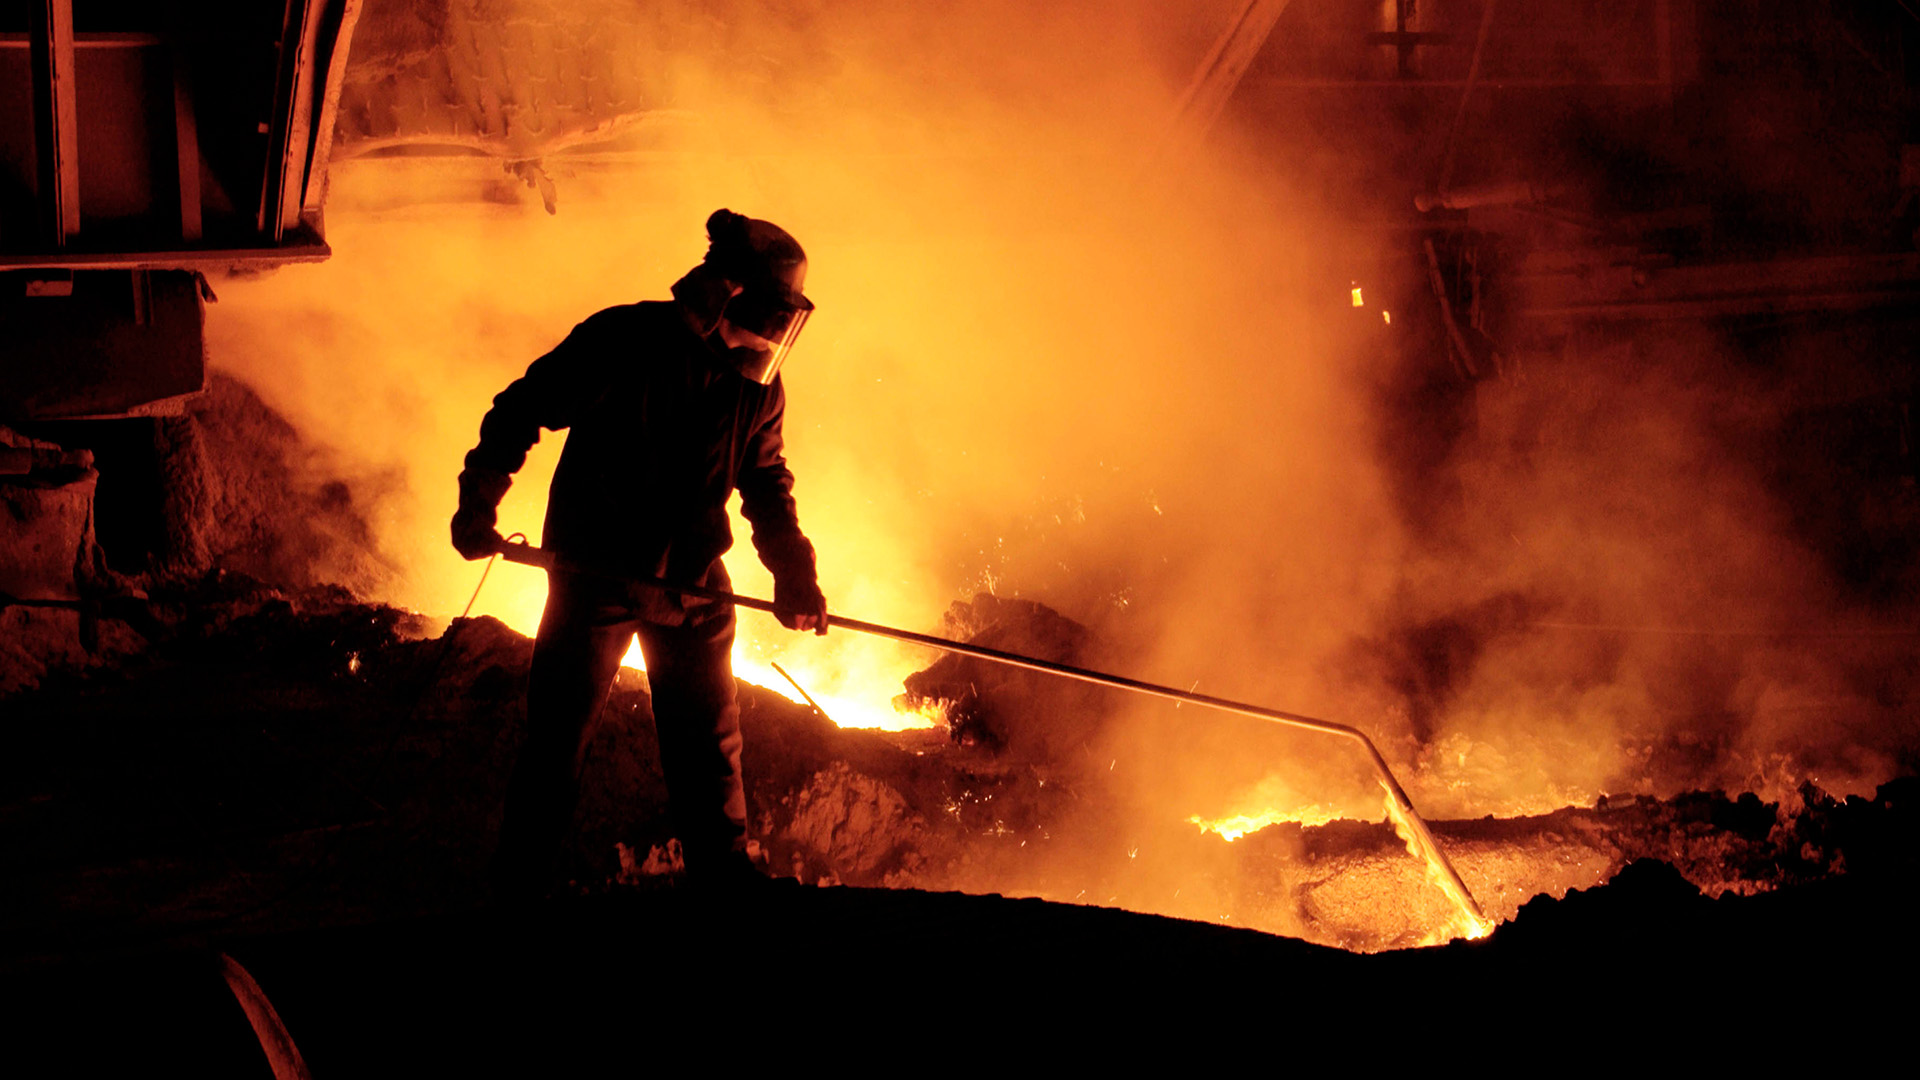 Tata Steel warns of uncertainty over UK business